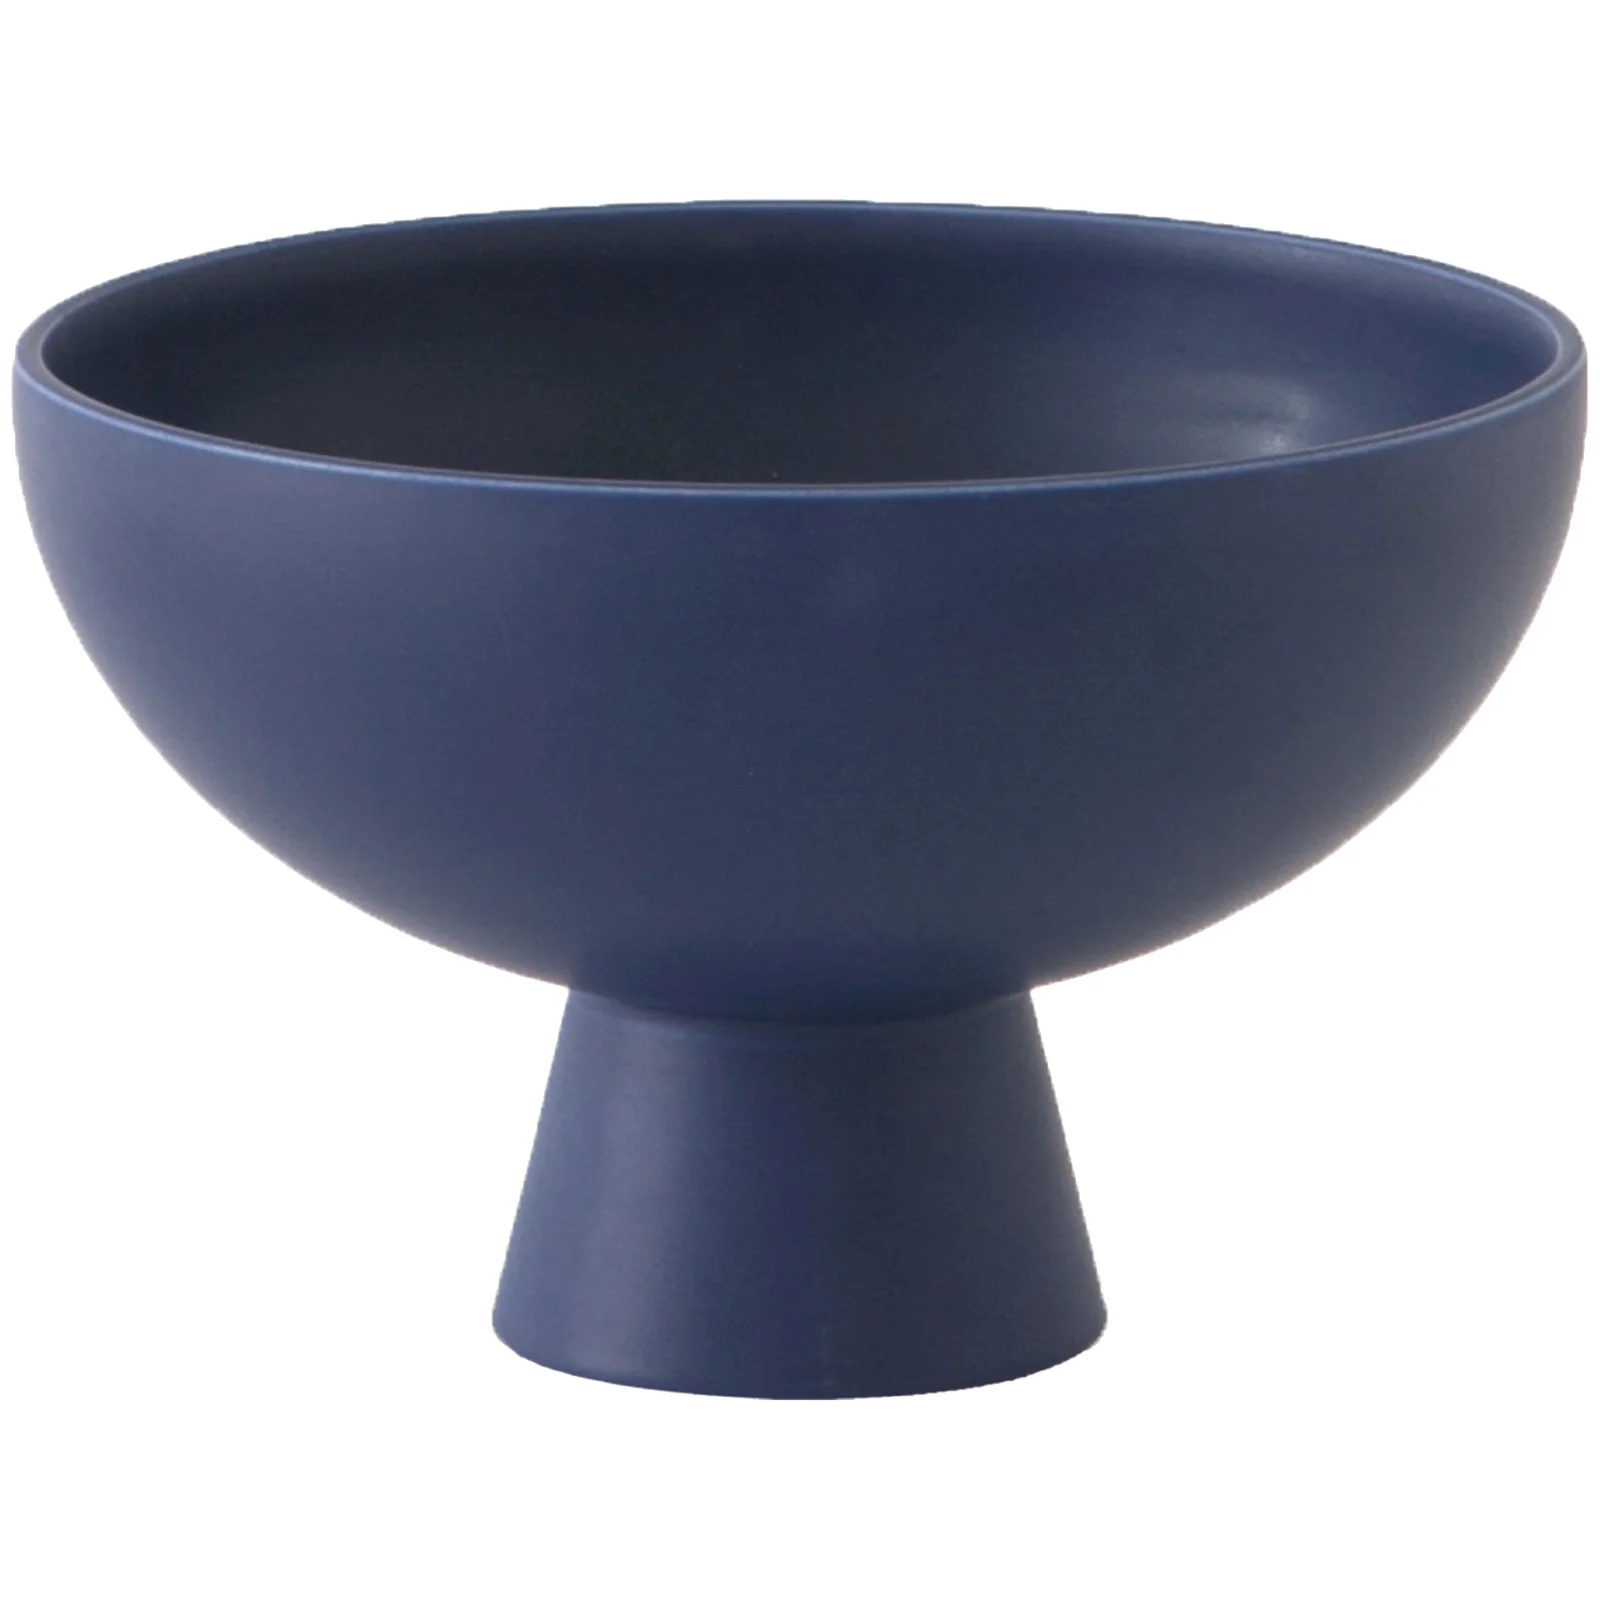 Raawii Strøm Bowl - Blue - Medium Image 1